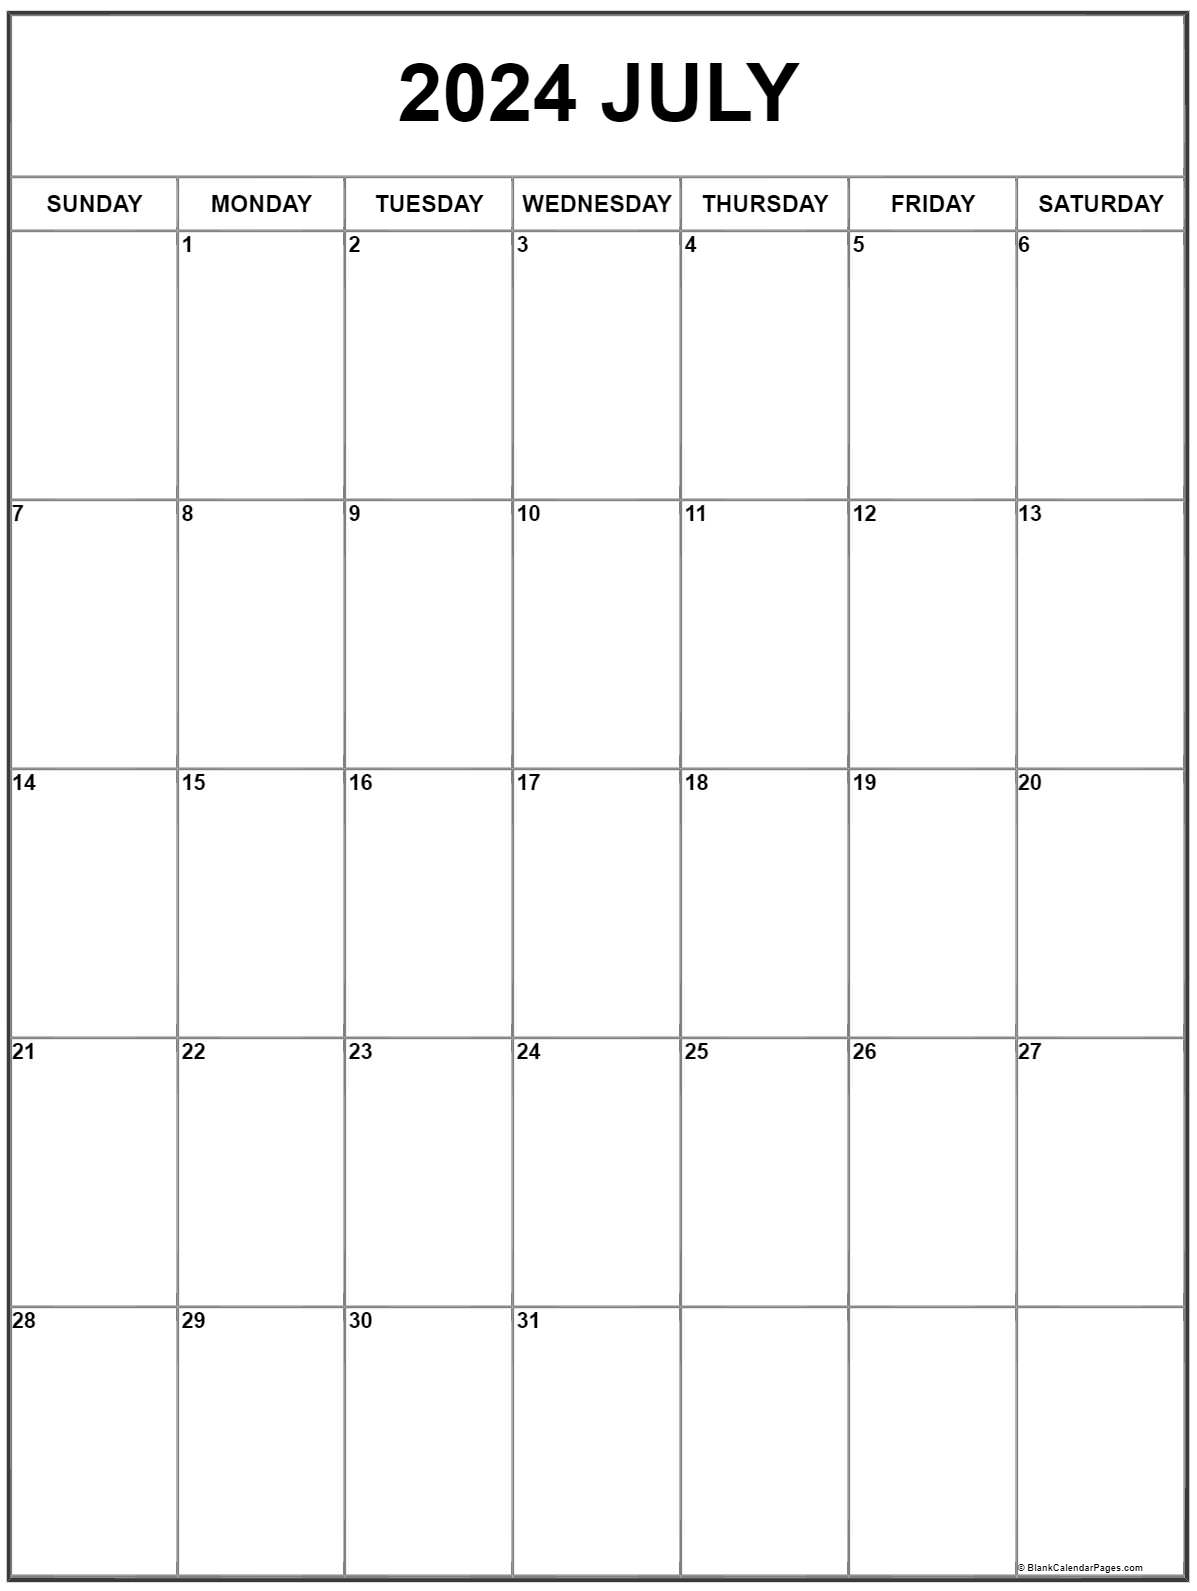 july-2023-calendar-free-printable-calendar-july-2023-monthly